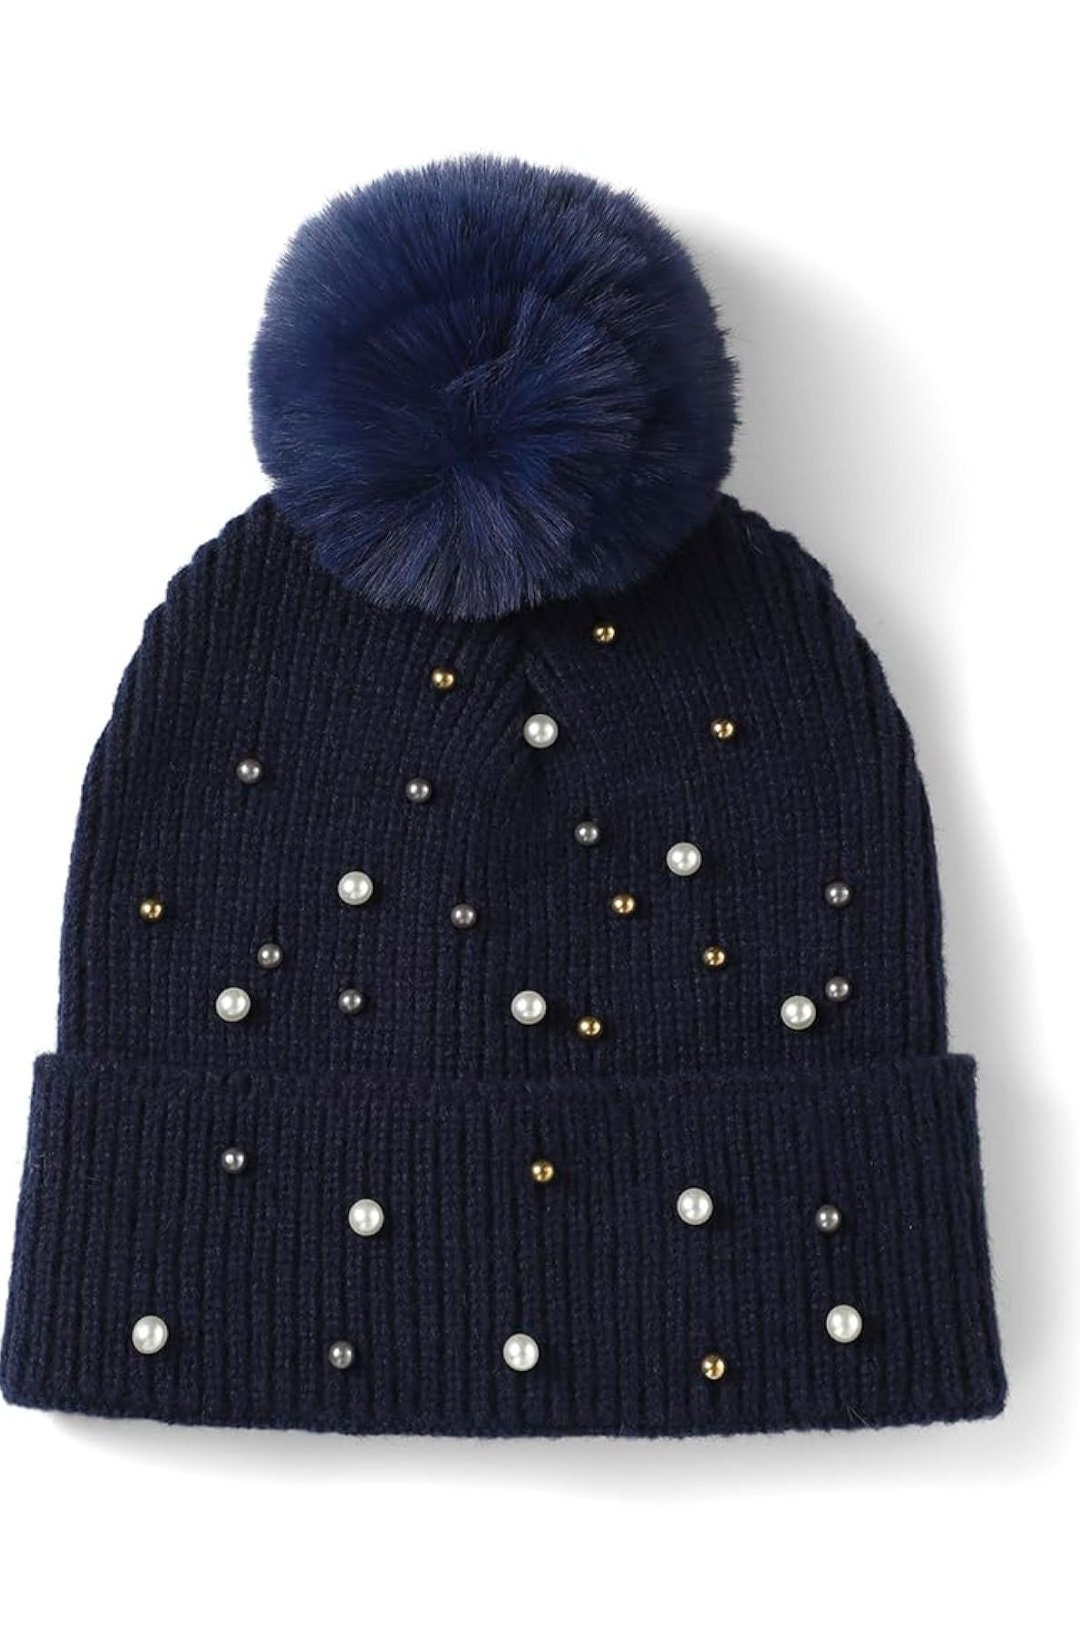 Syhood 2 Pieces Winter Ski Balaclava Knitted Warm Hat Fleece Lined